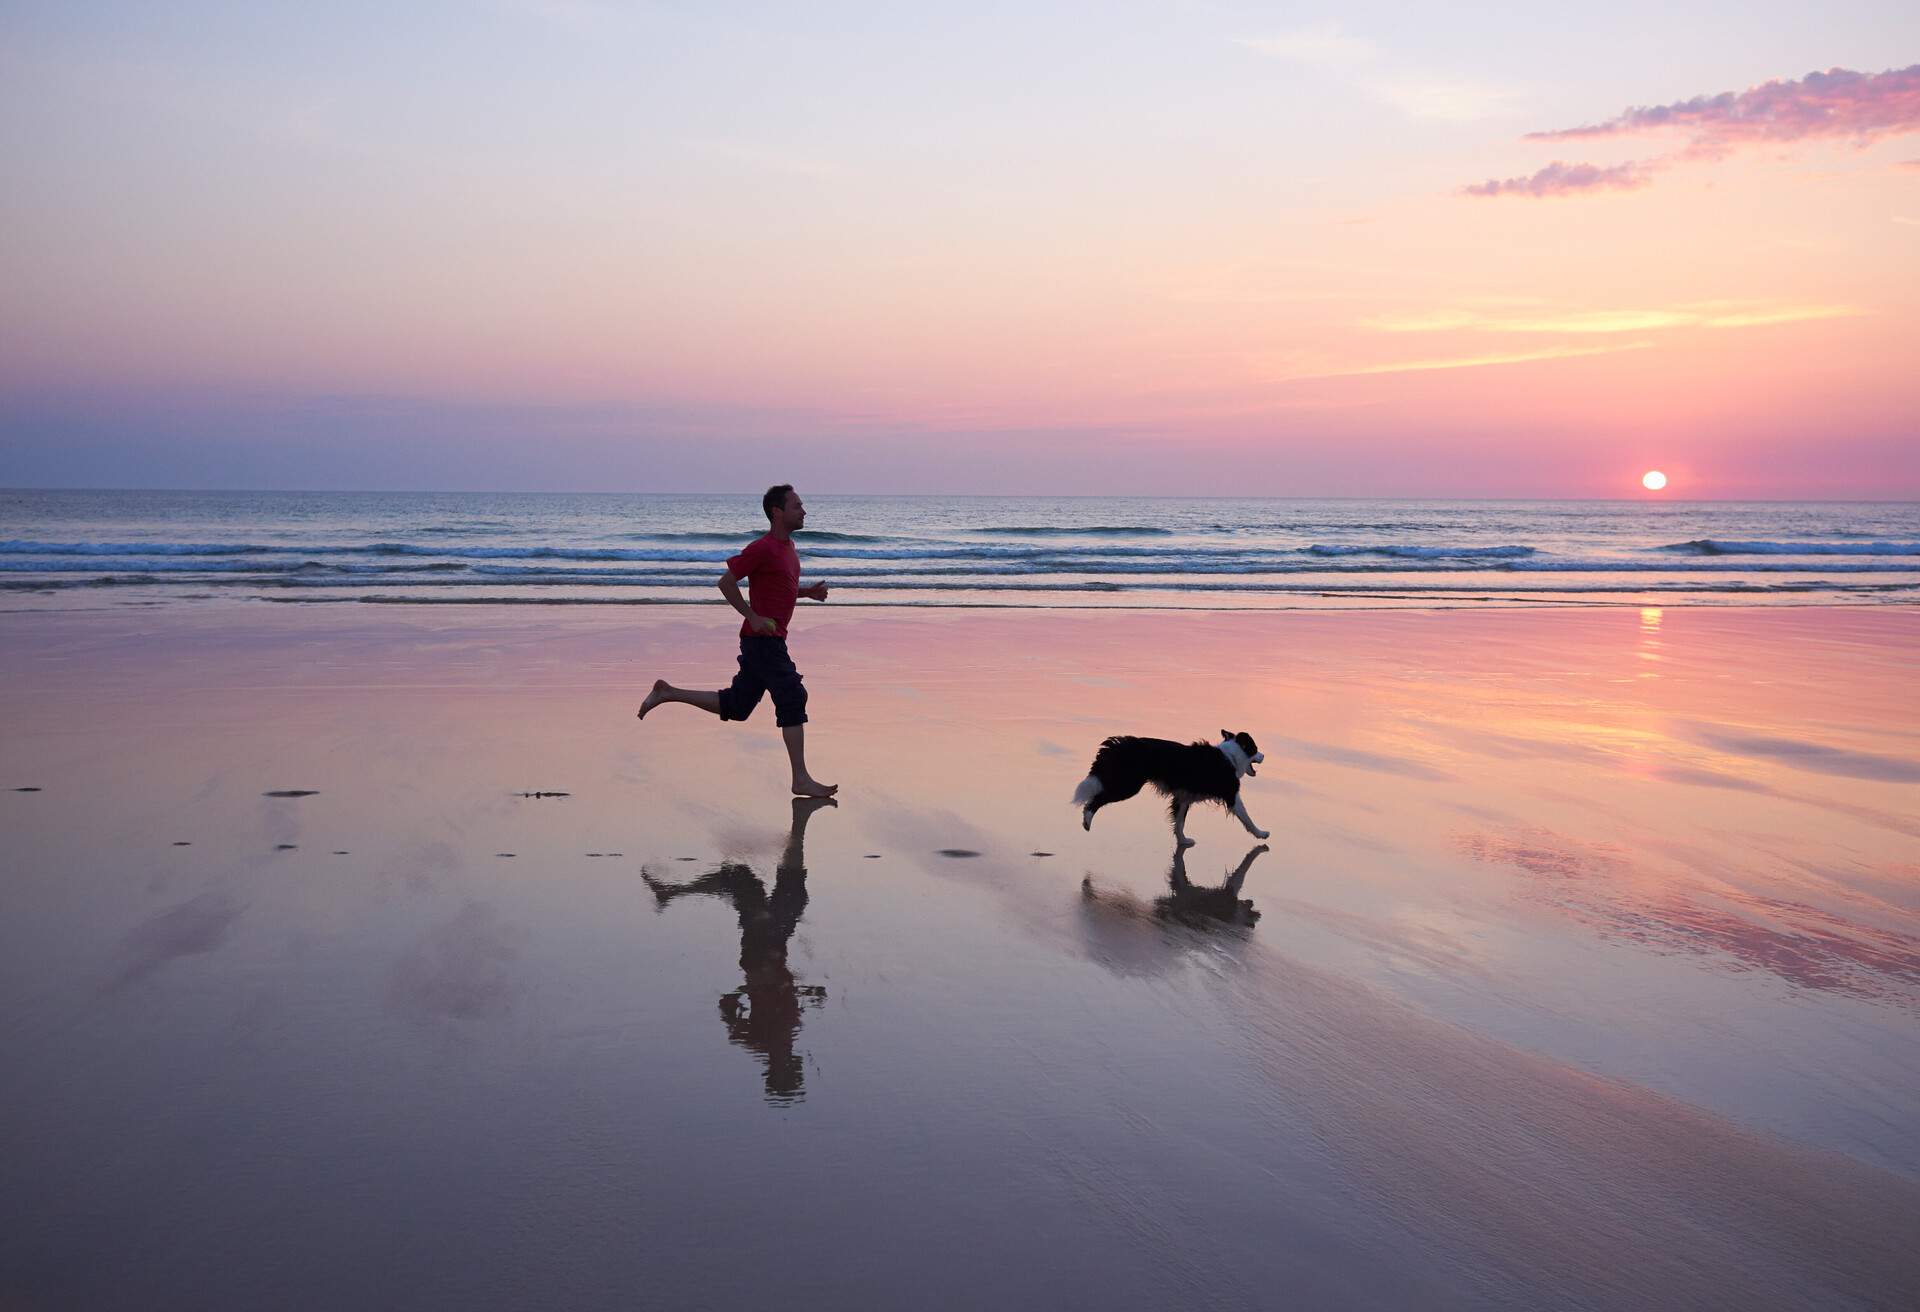 As the sun sets a figure runs along side his dog.